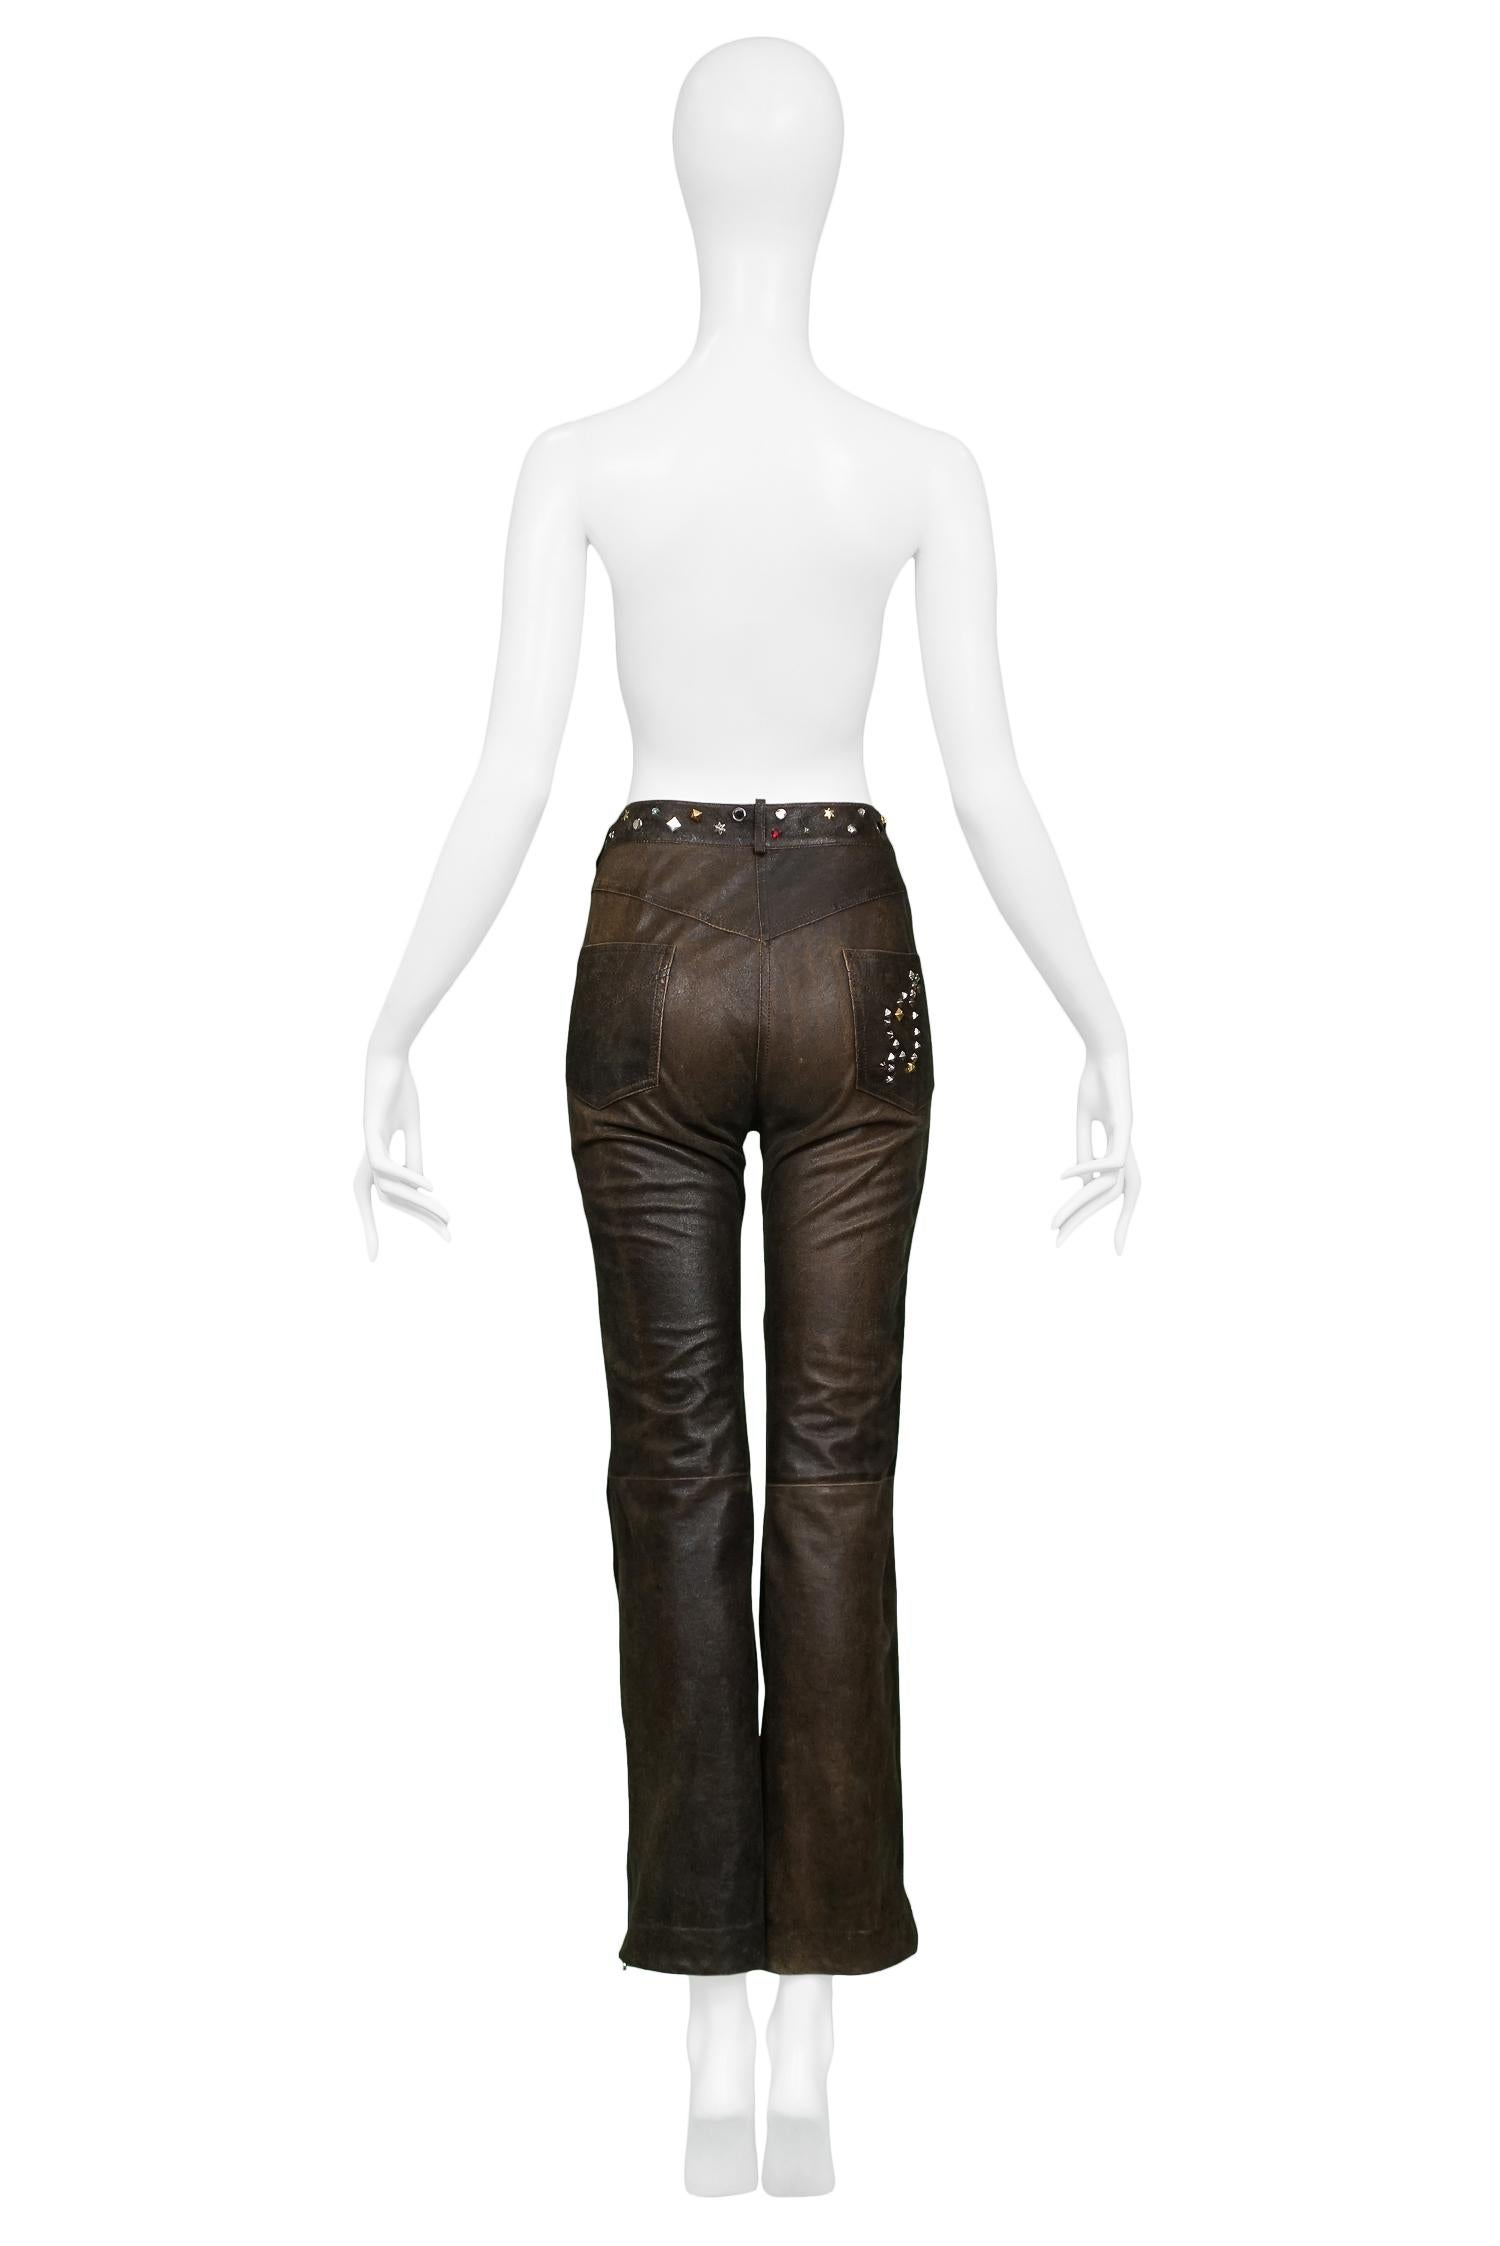 Black Christian Dior by John Galliano Runway Leather Studded Zipper Pants, 2001 